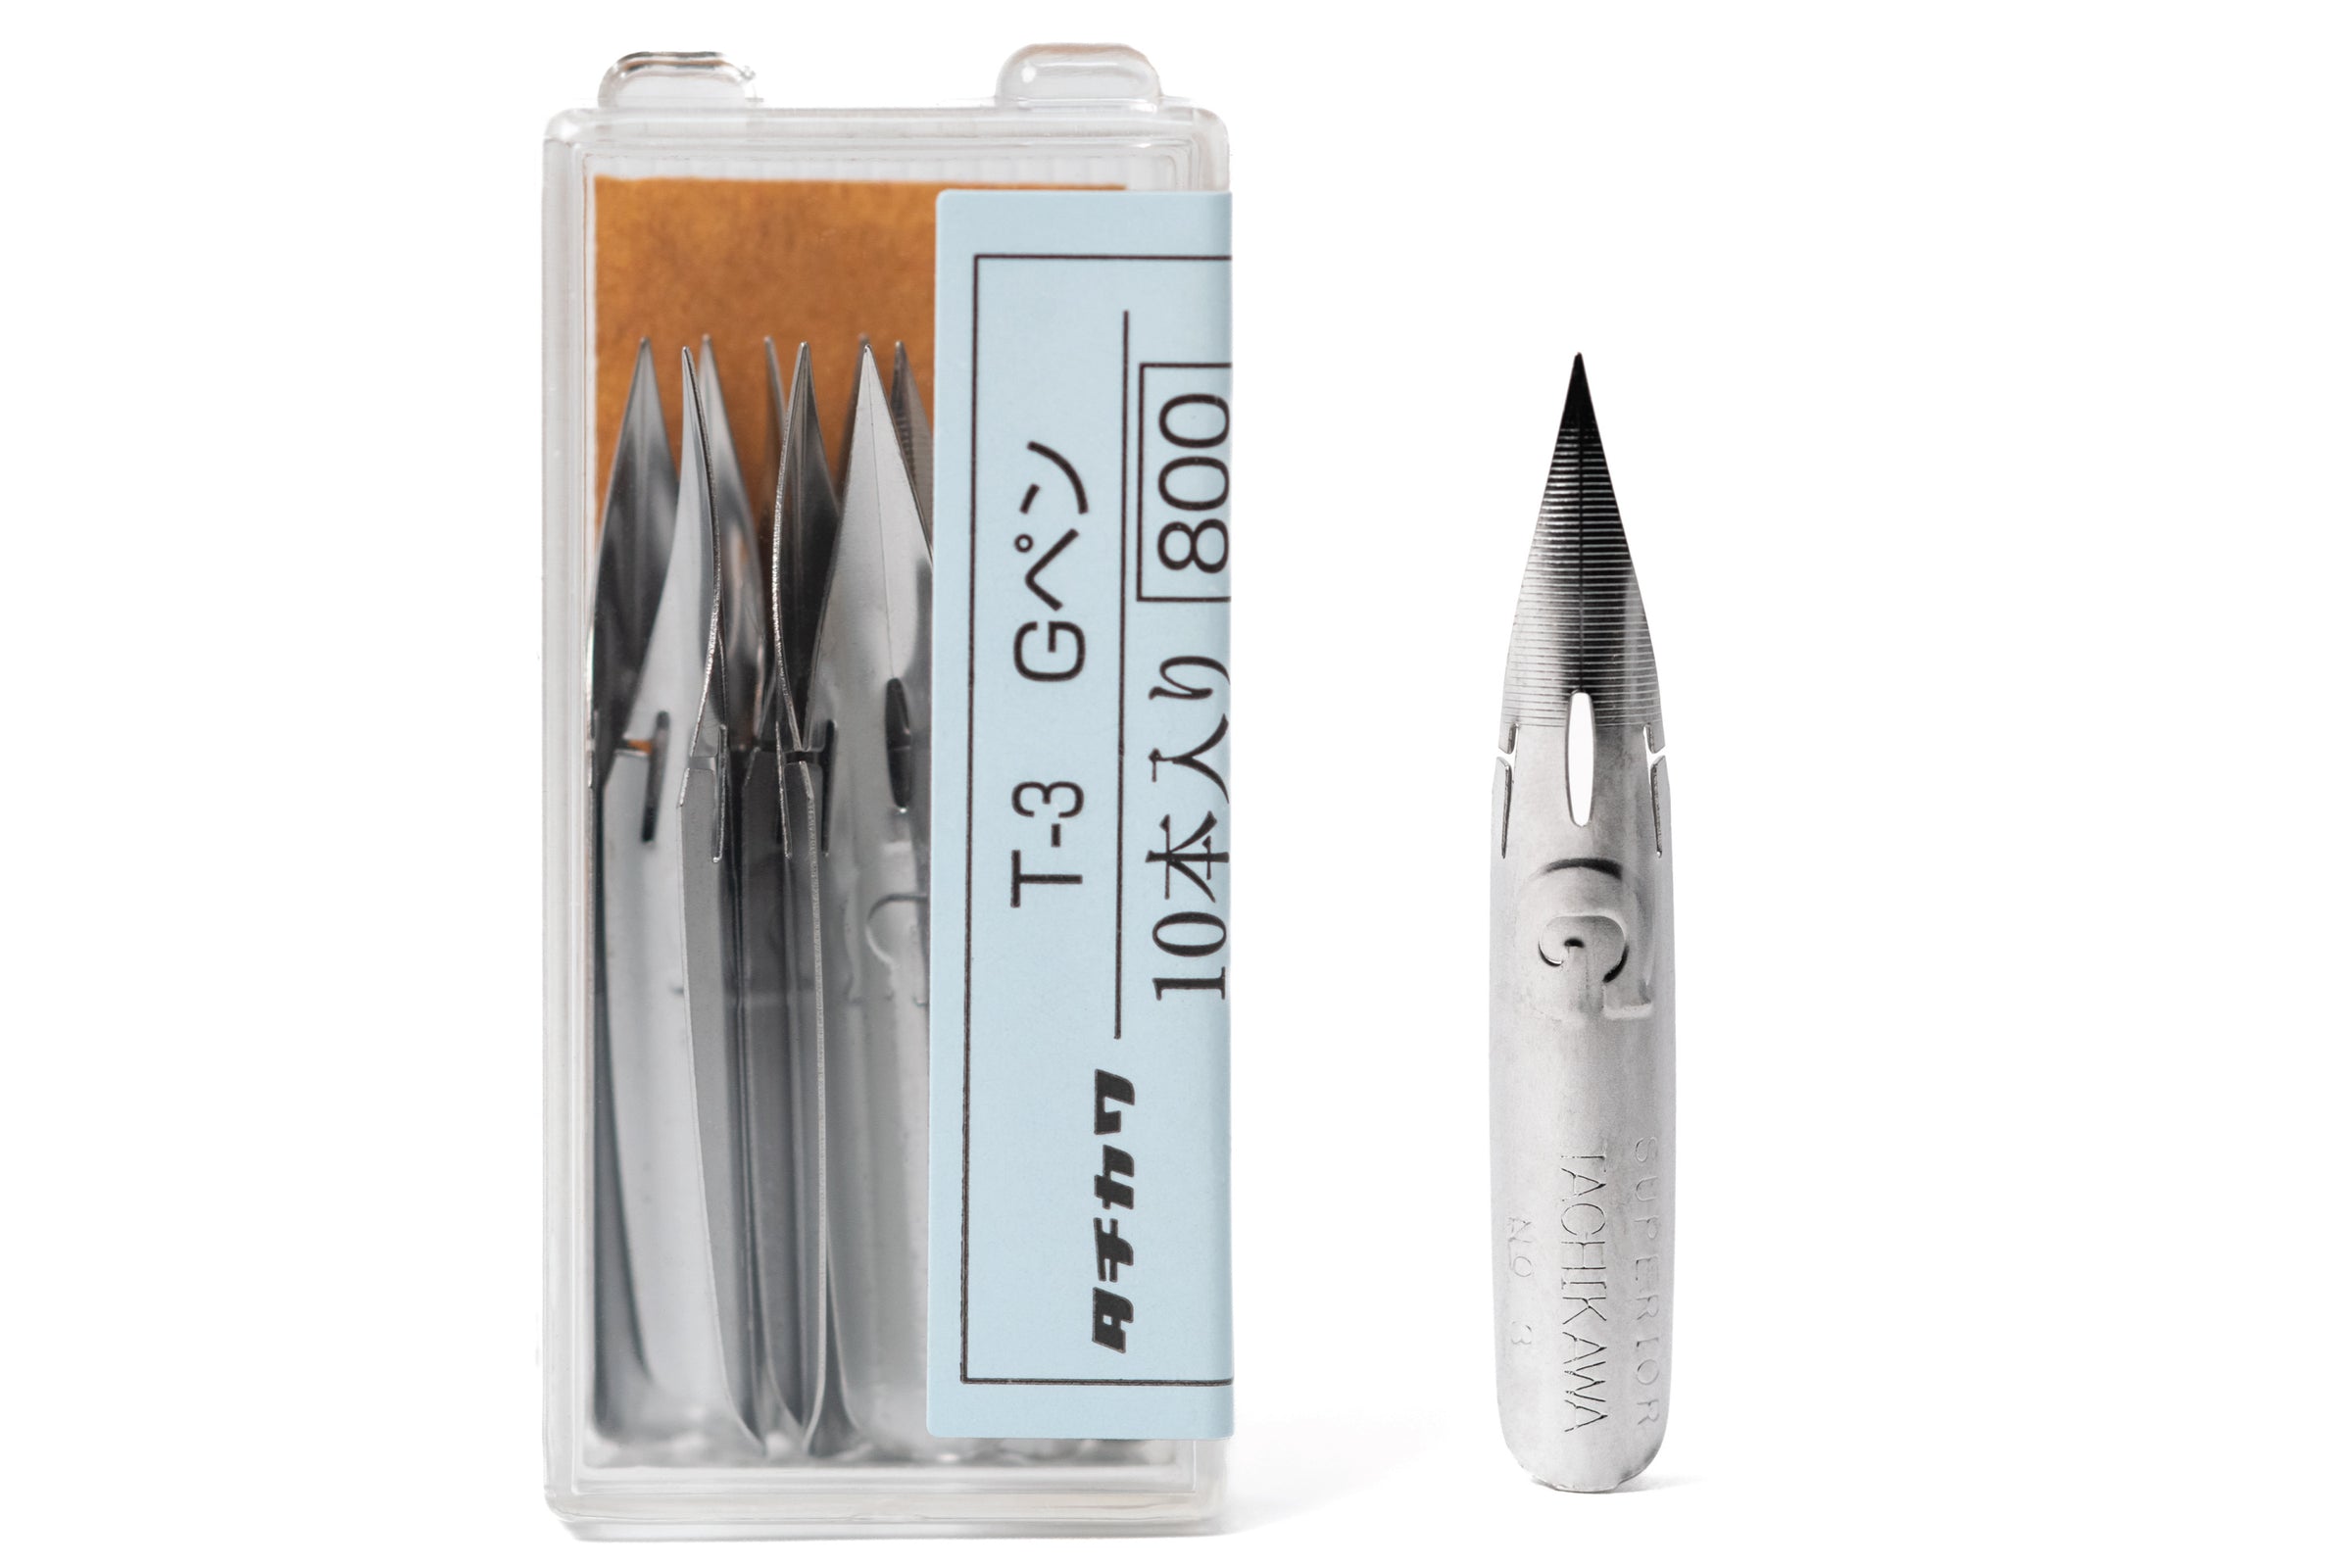  Tachikawa Pen Nib Holder(T-40) + Nikko G Pen Nib, Pack of 3,and  Anti Rust Paper included